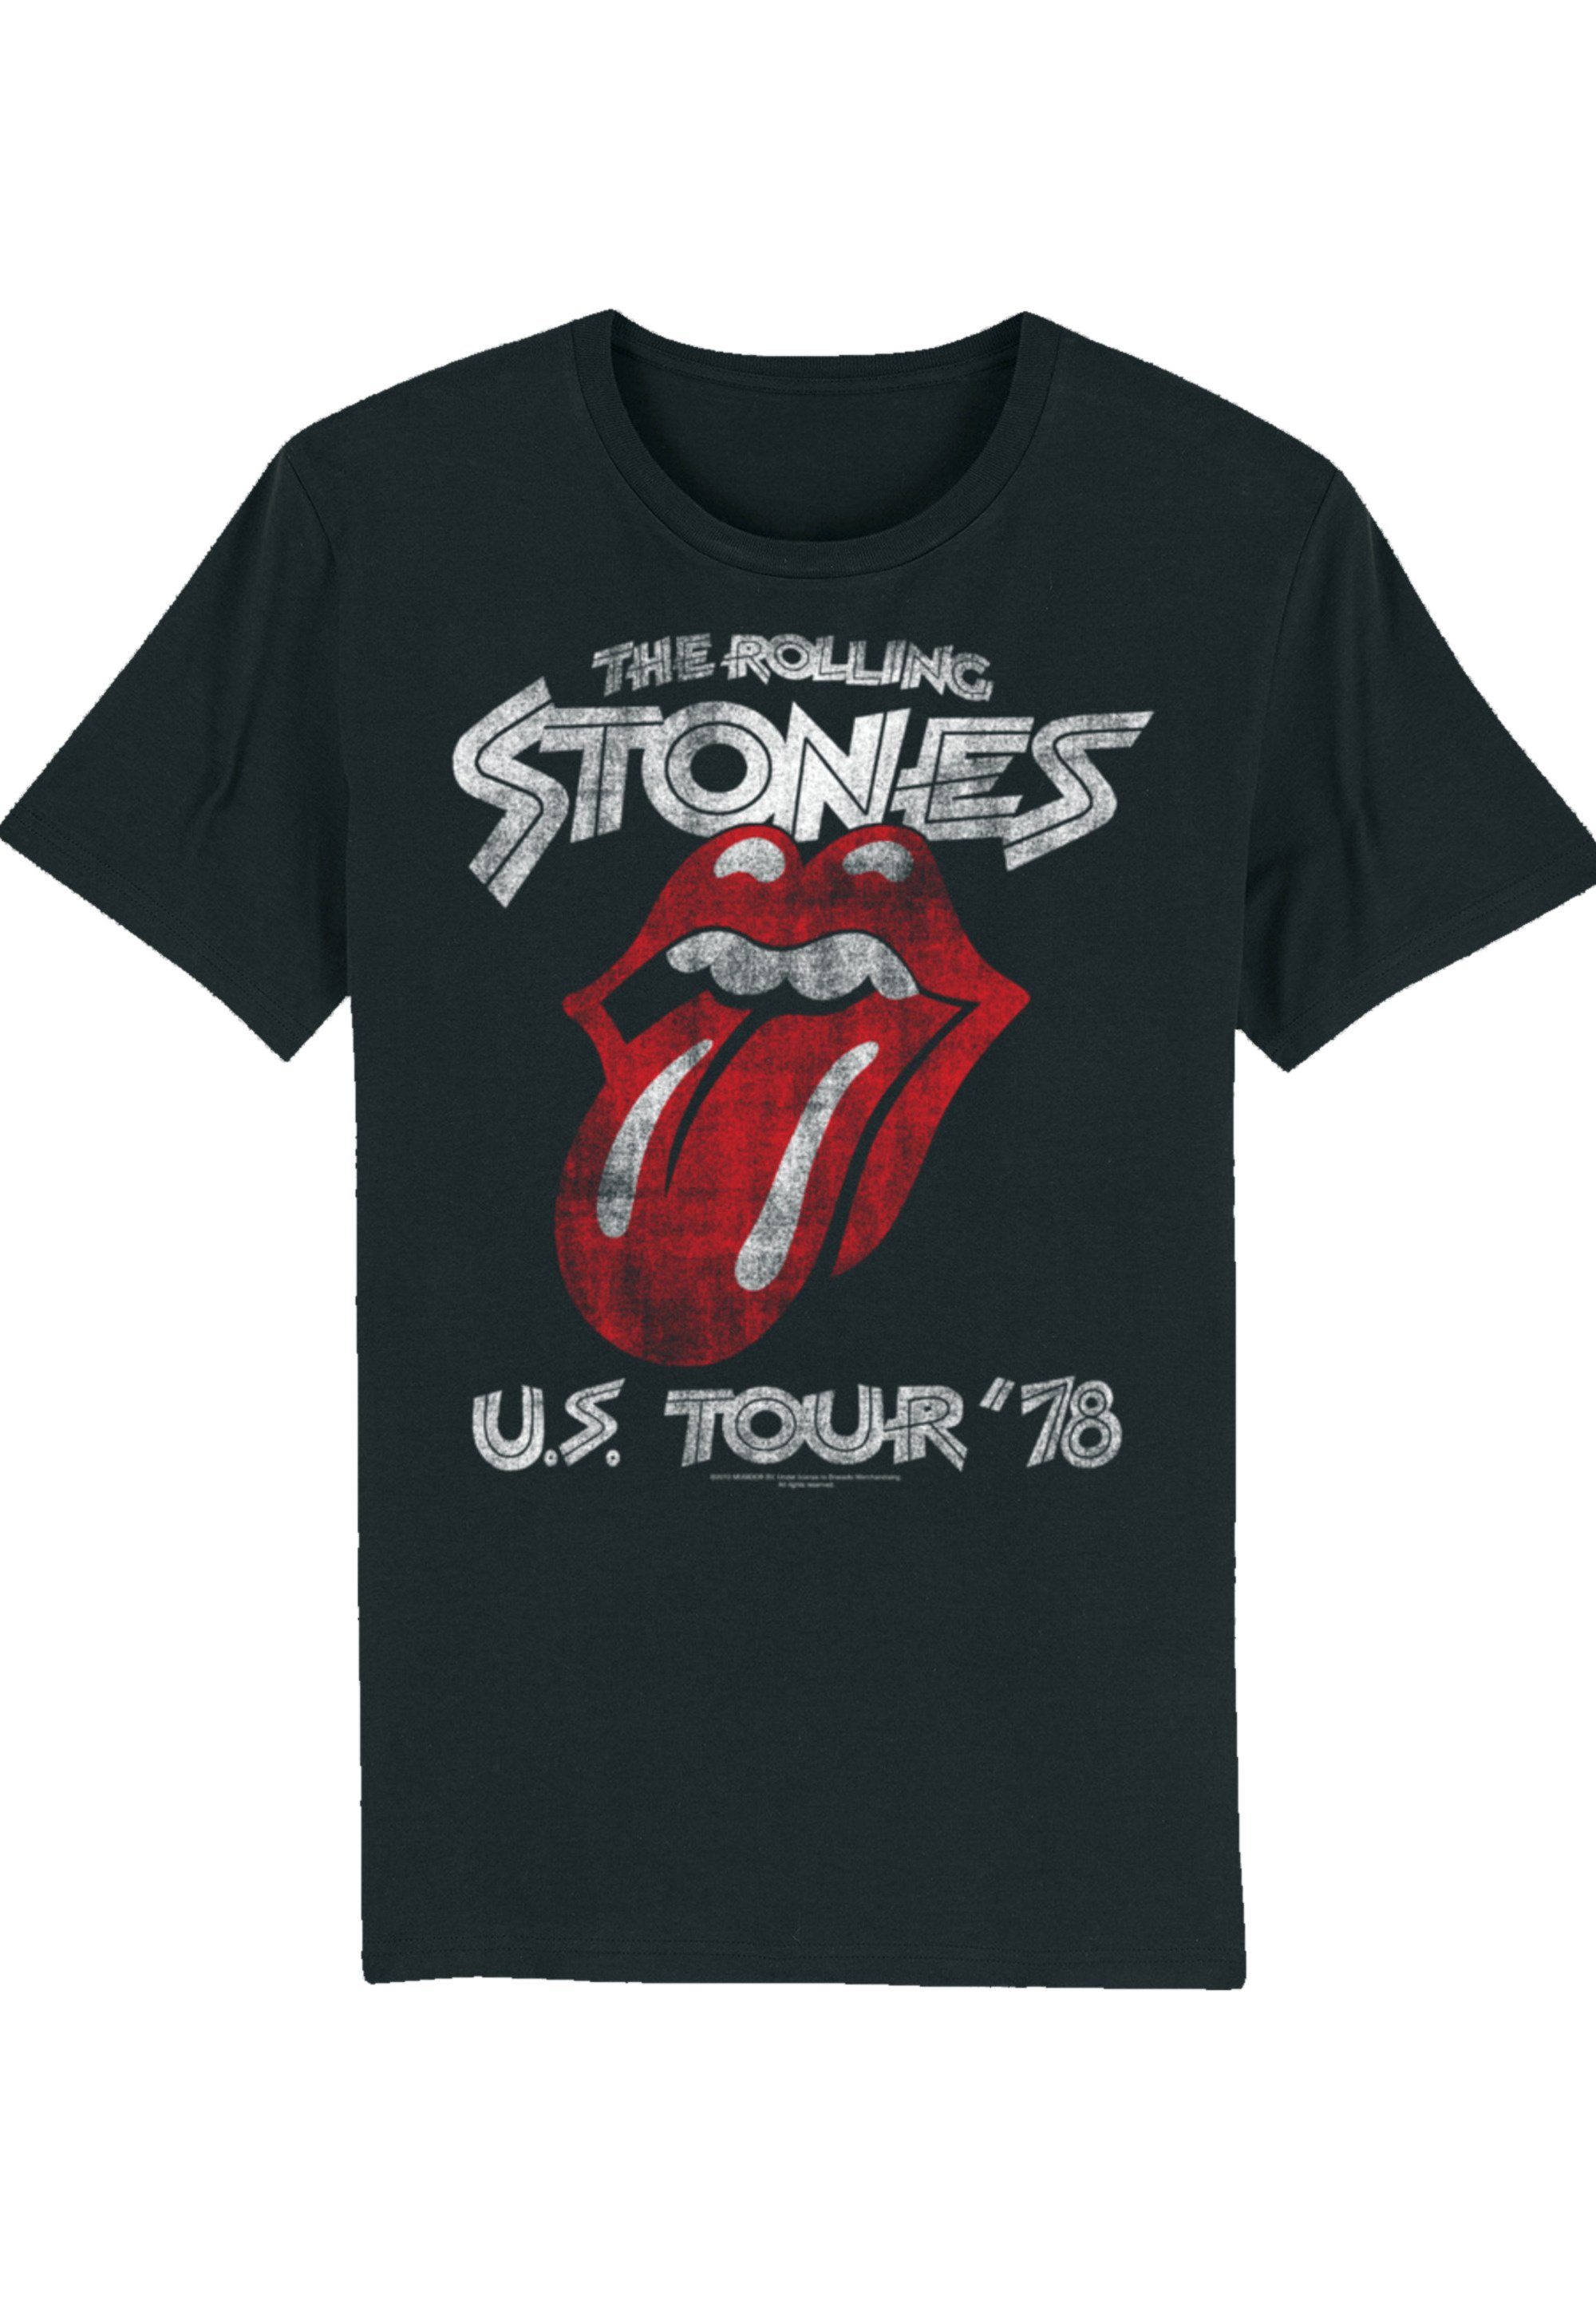 \'78 T-Shirt Stones und Tour The Rolling Print, vielseitig US F4NT4STIC kombinierbar Komfortabel